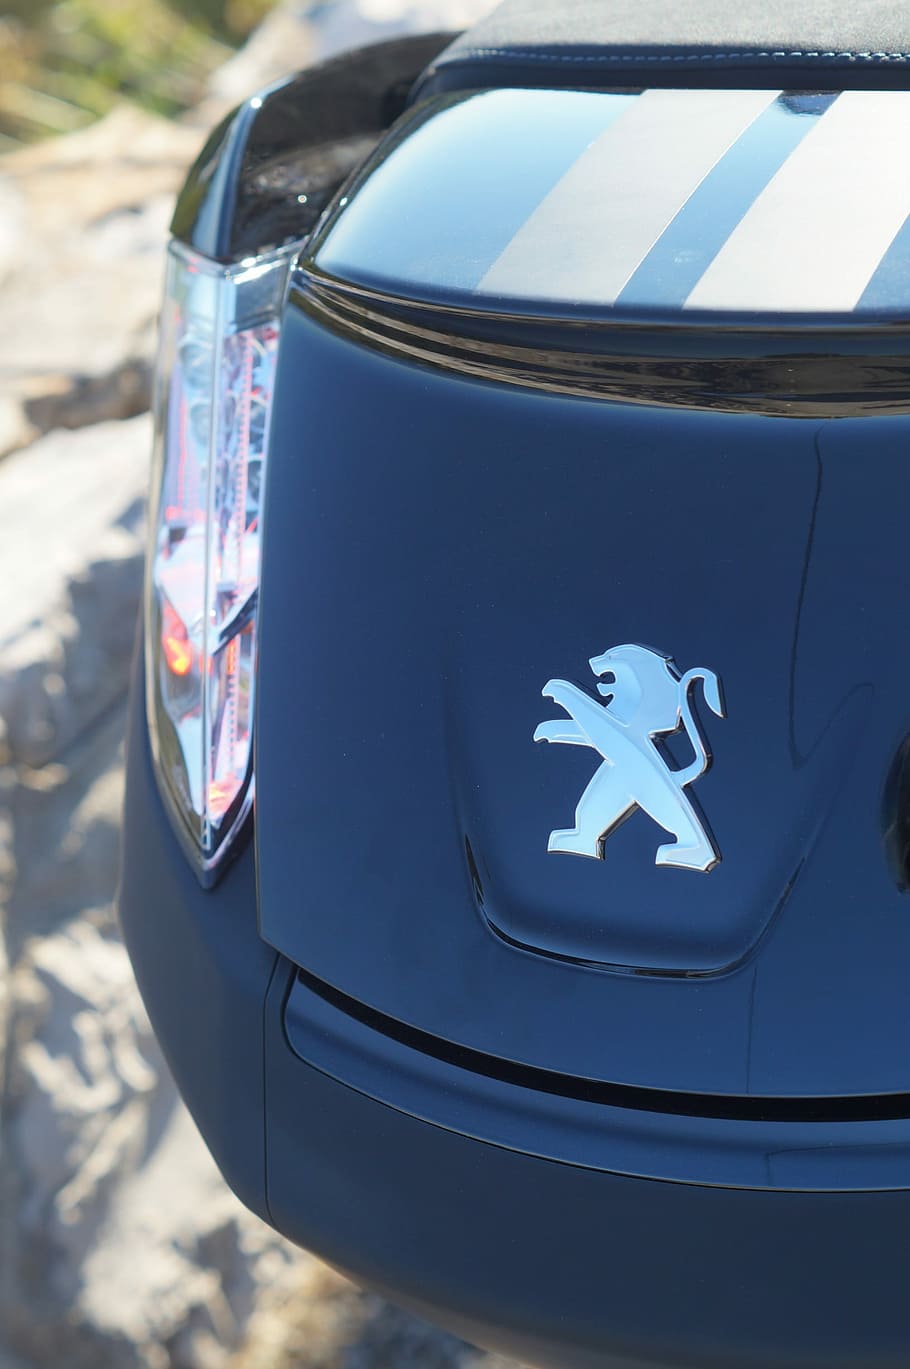 Peugeot, Scooter, satelis, black edition, sea, vacantion, transportation, car, close-up, blue